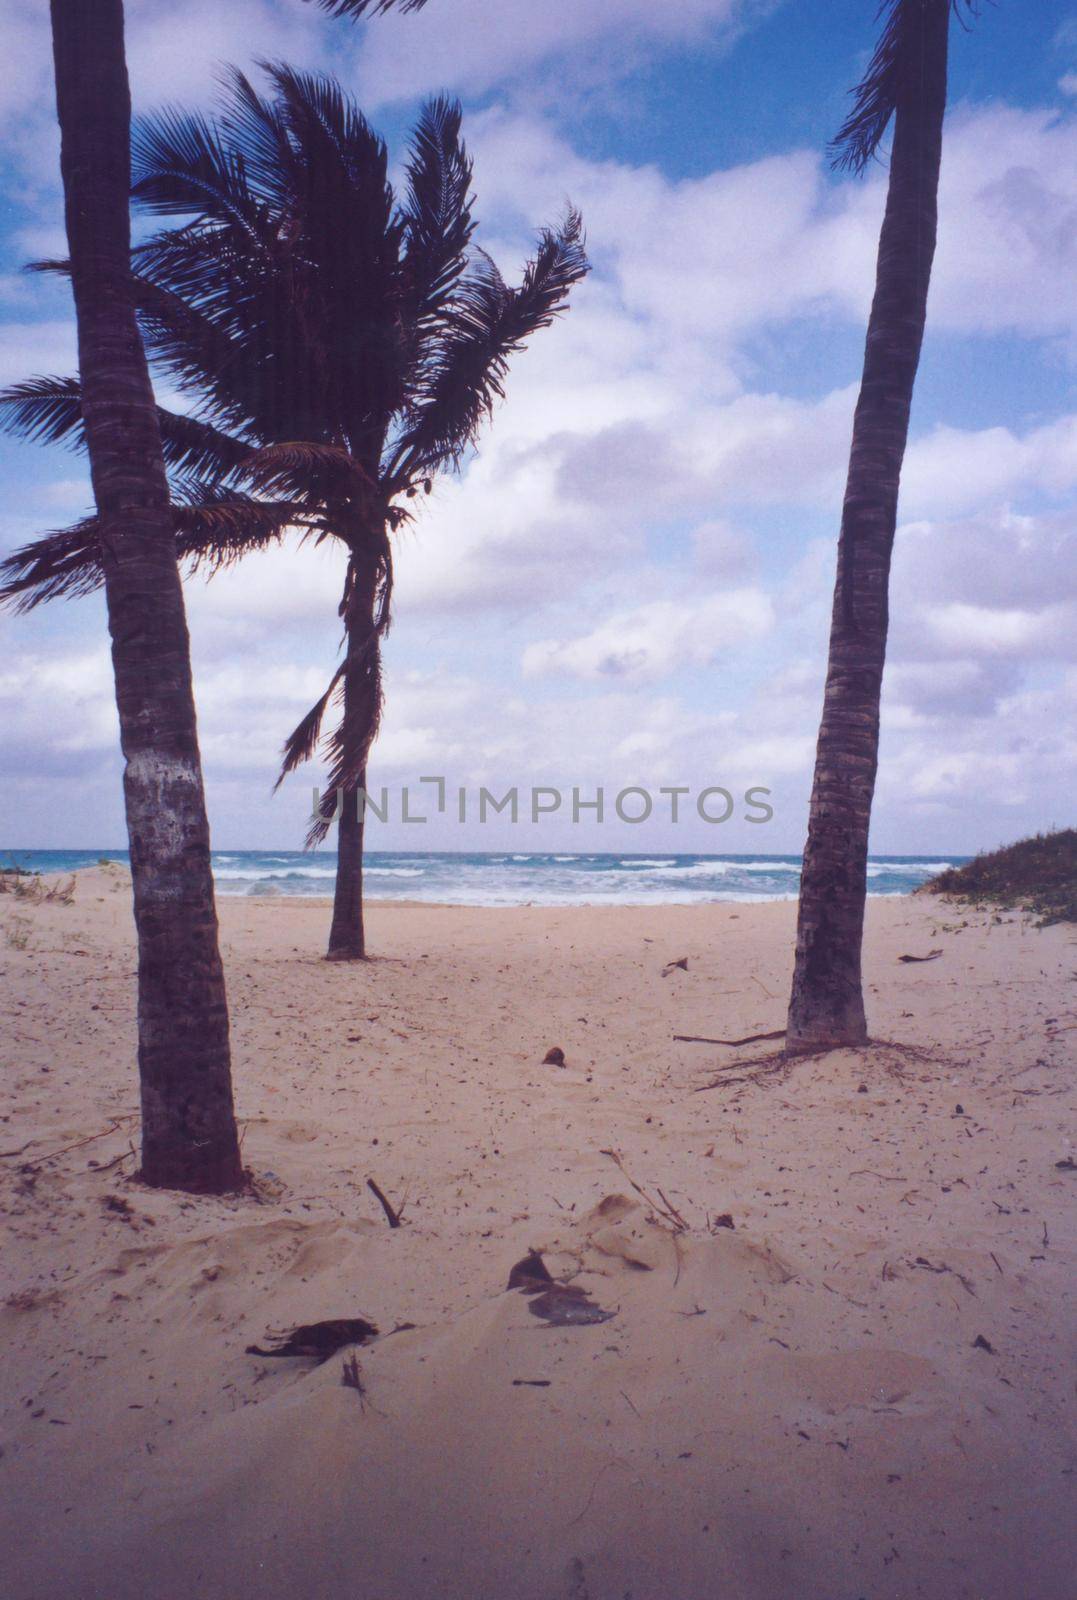 Cuba 1979, Cuban beach in 70's by pippocarlot